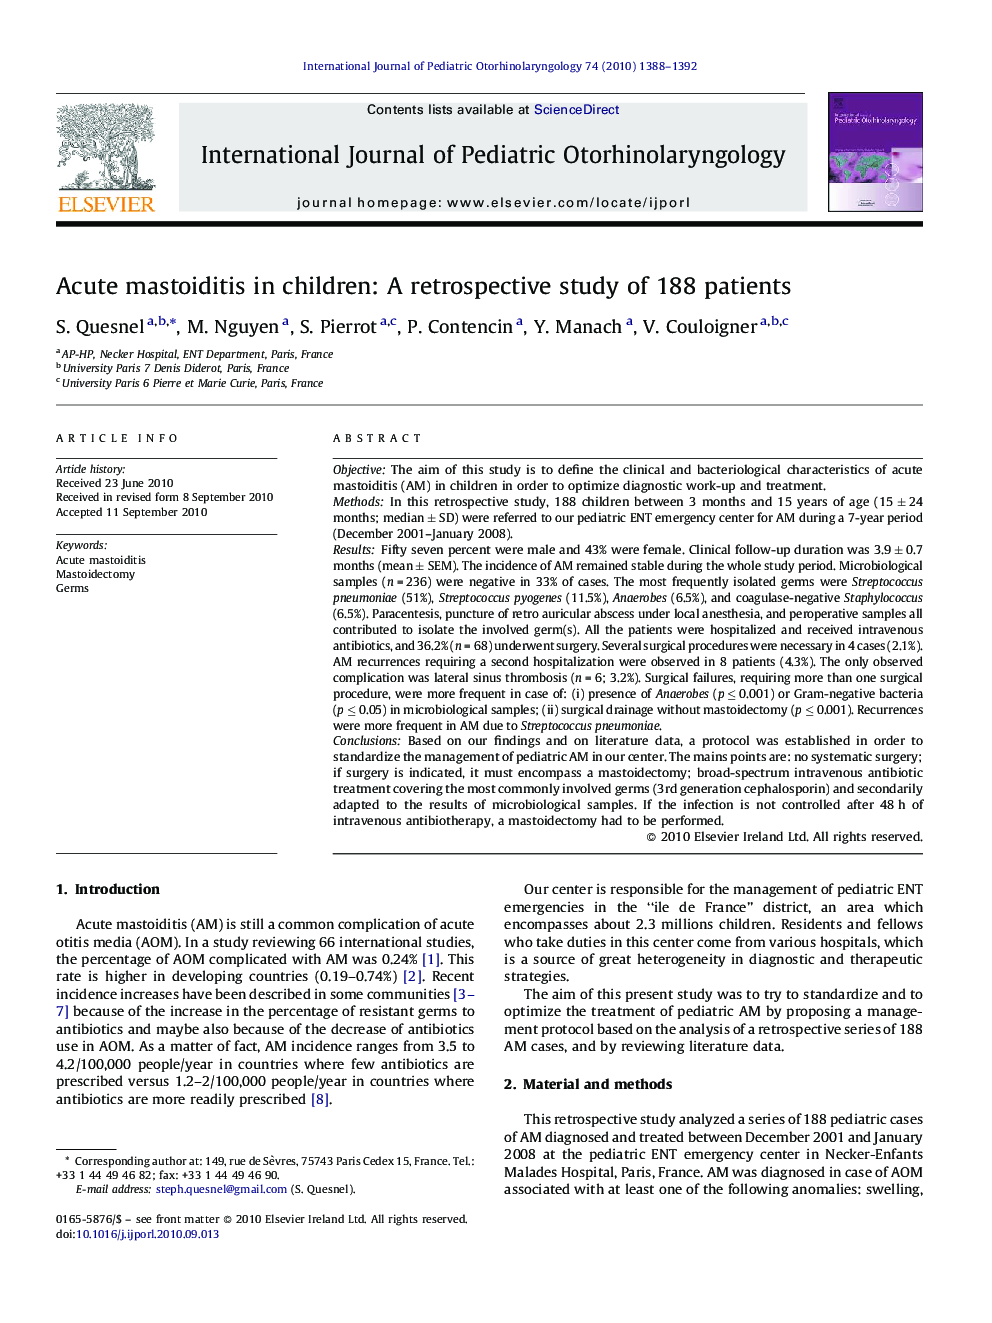 Acute mastoiditis in children: A retrospective study of 188 patients